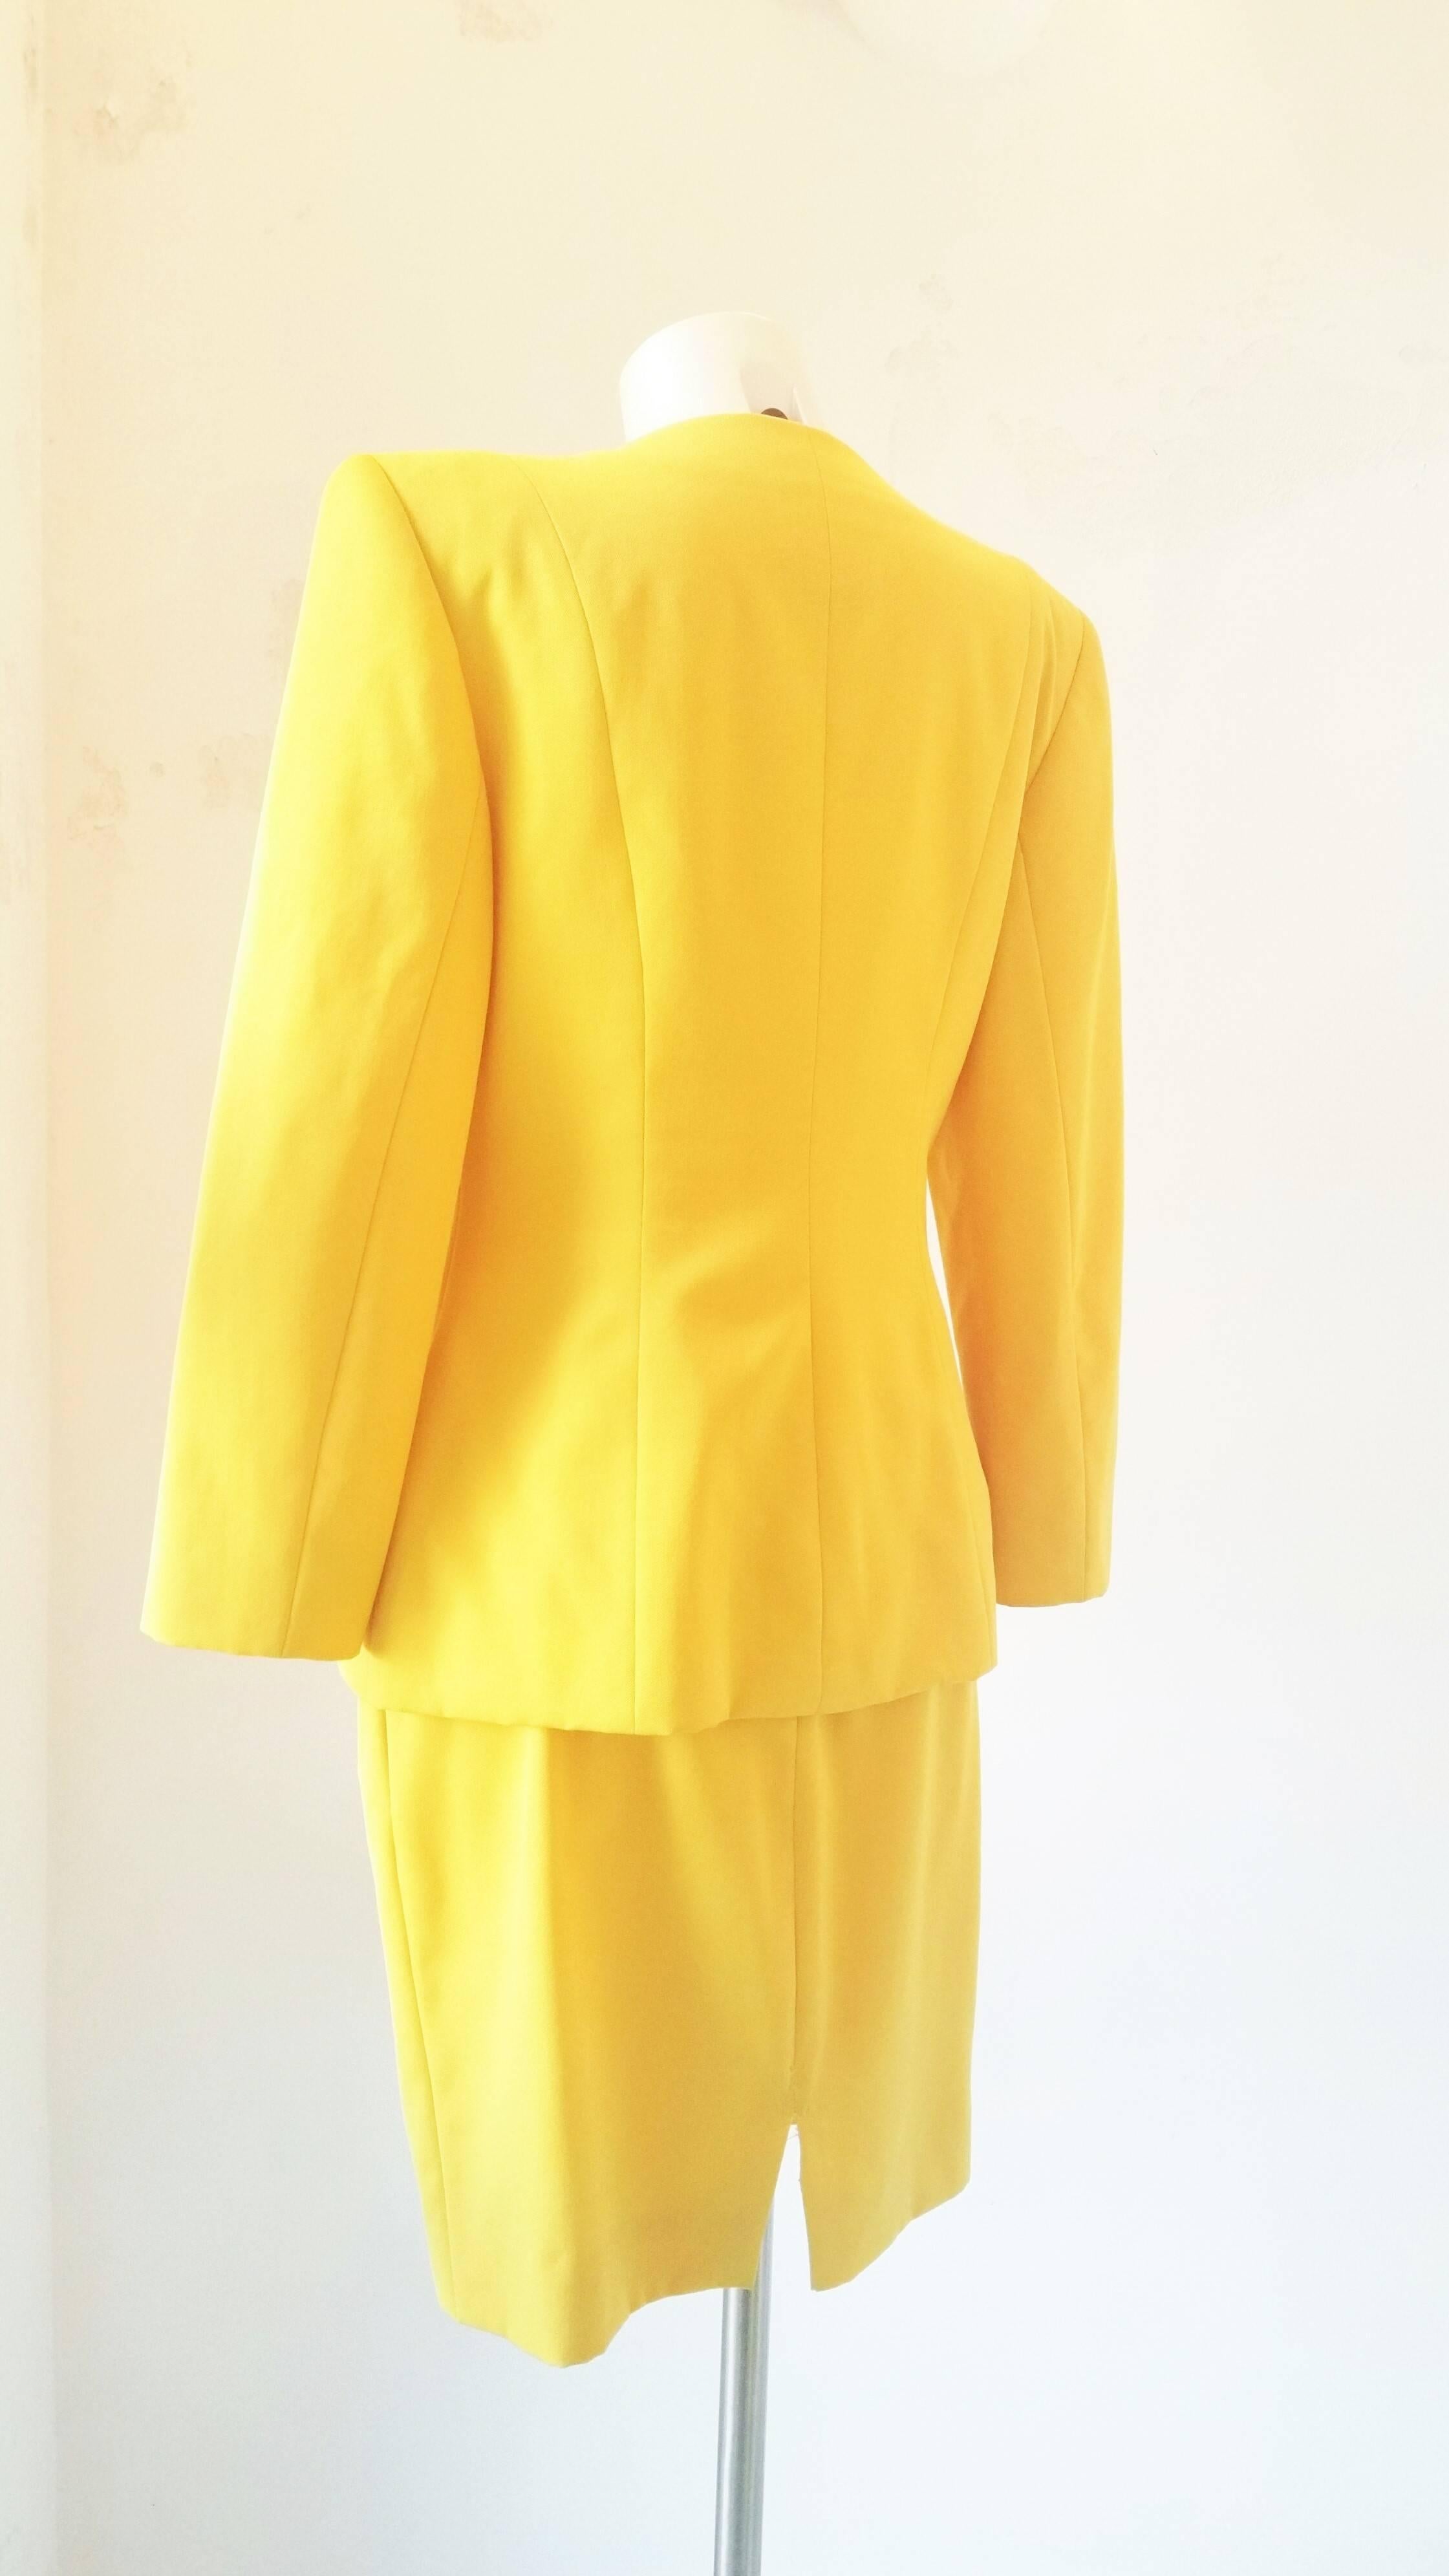 yellow suit jacket